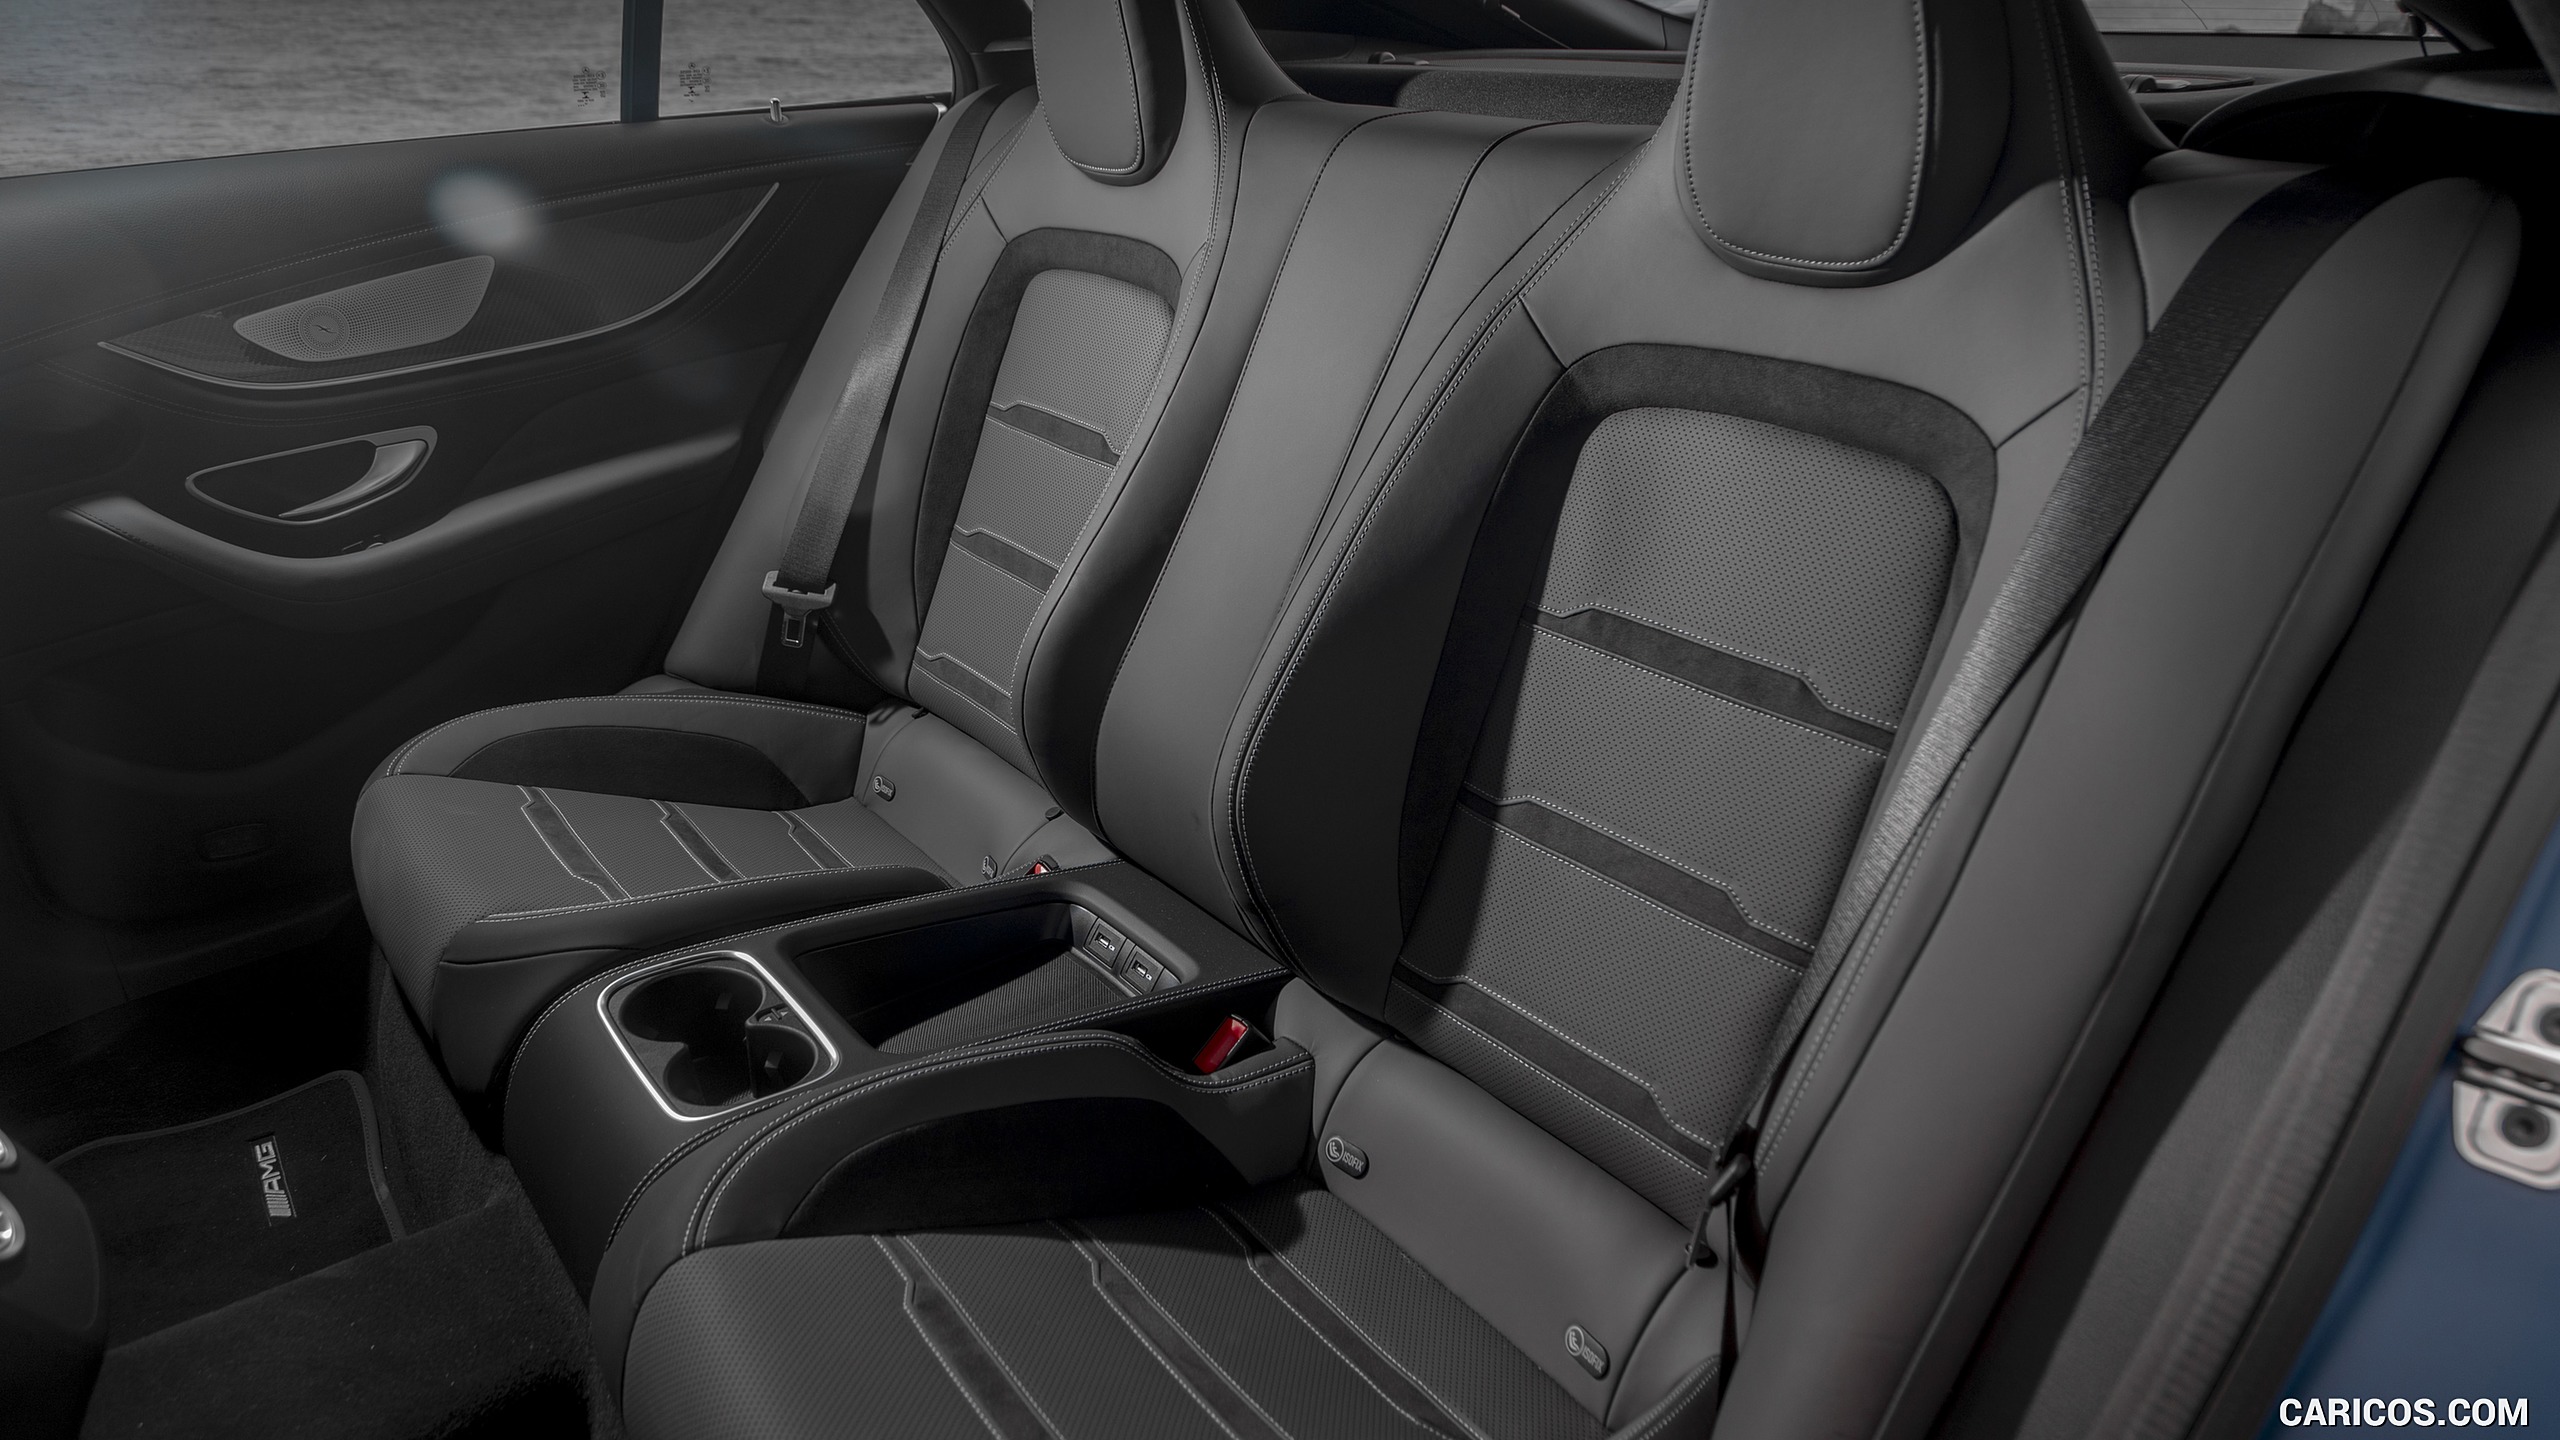 2019 Mercedes-AMG GT 63 S 4-Door Coupe (US-Spec) - Interior, Rear Seats, #424 of 427